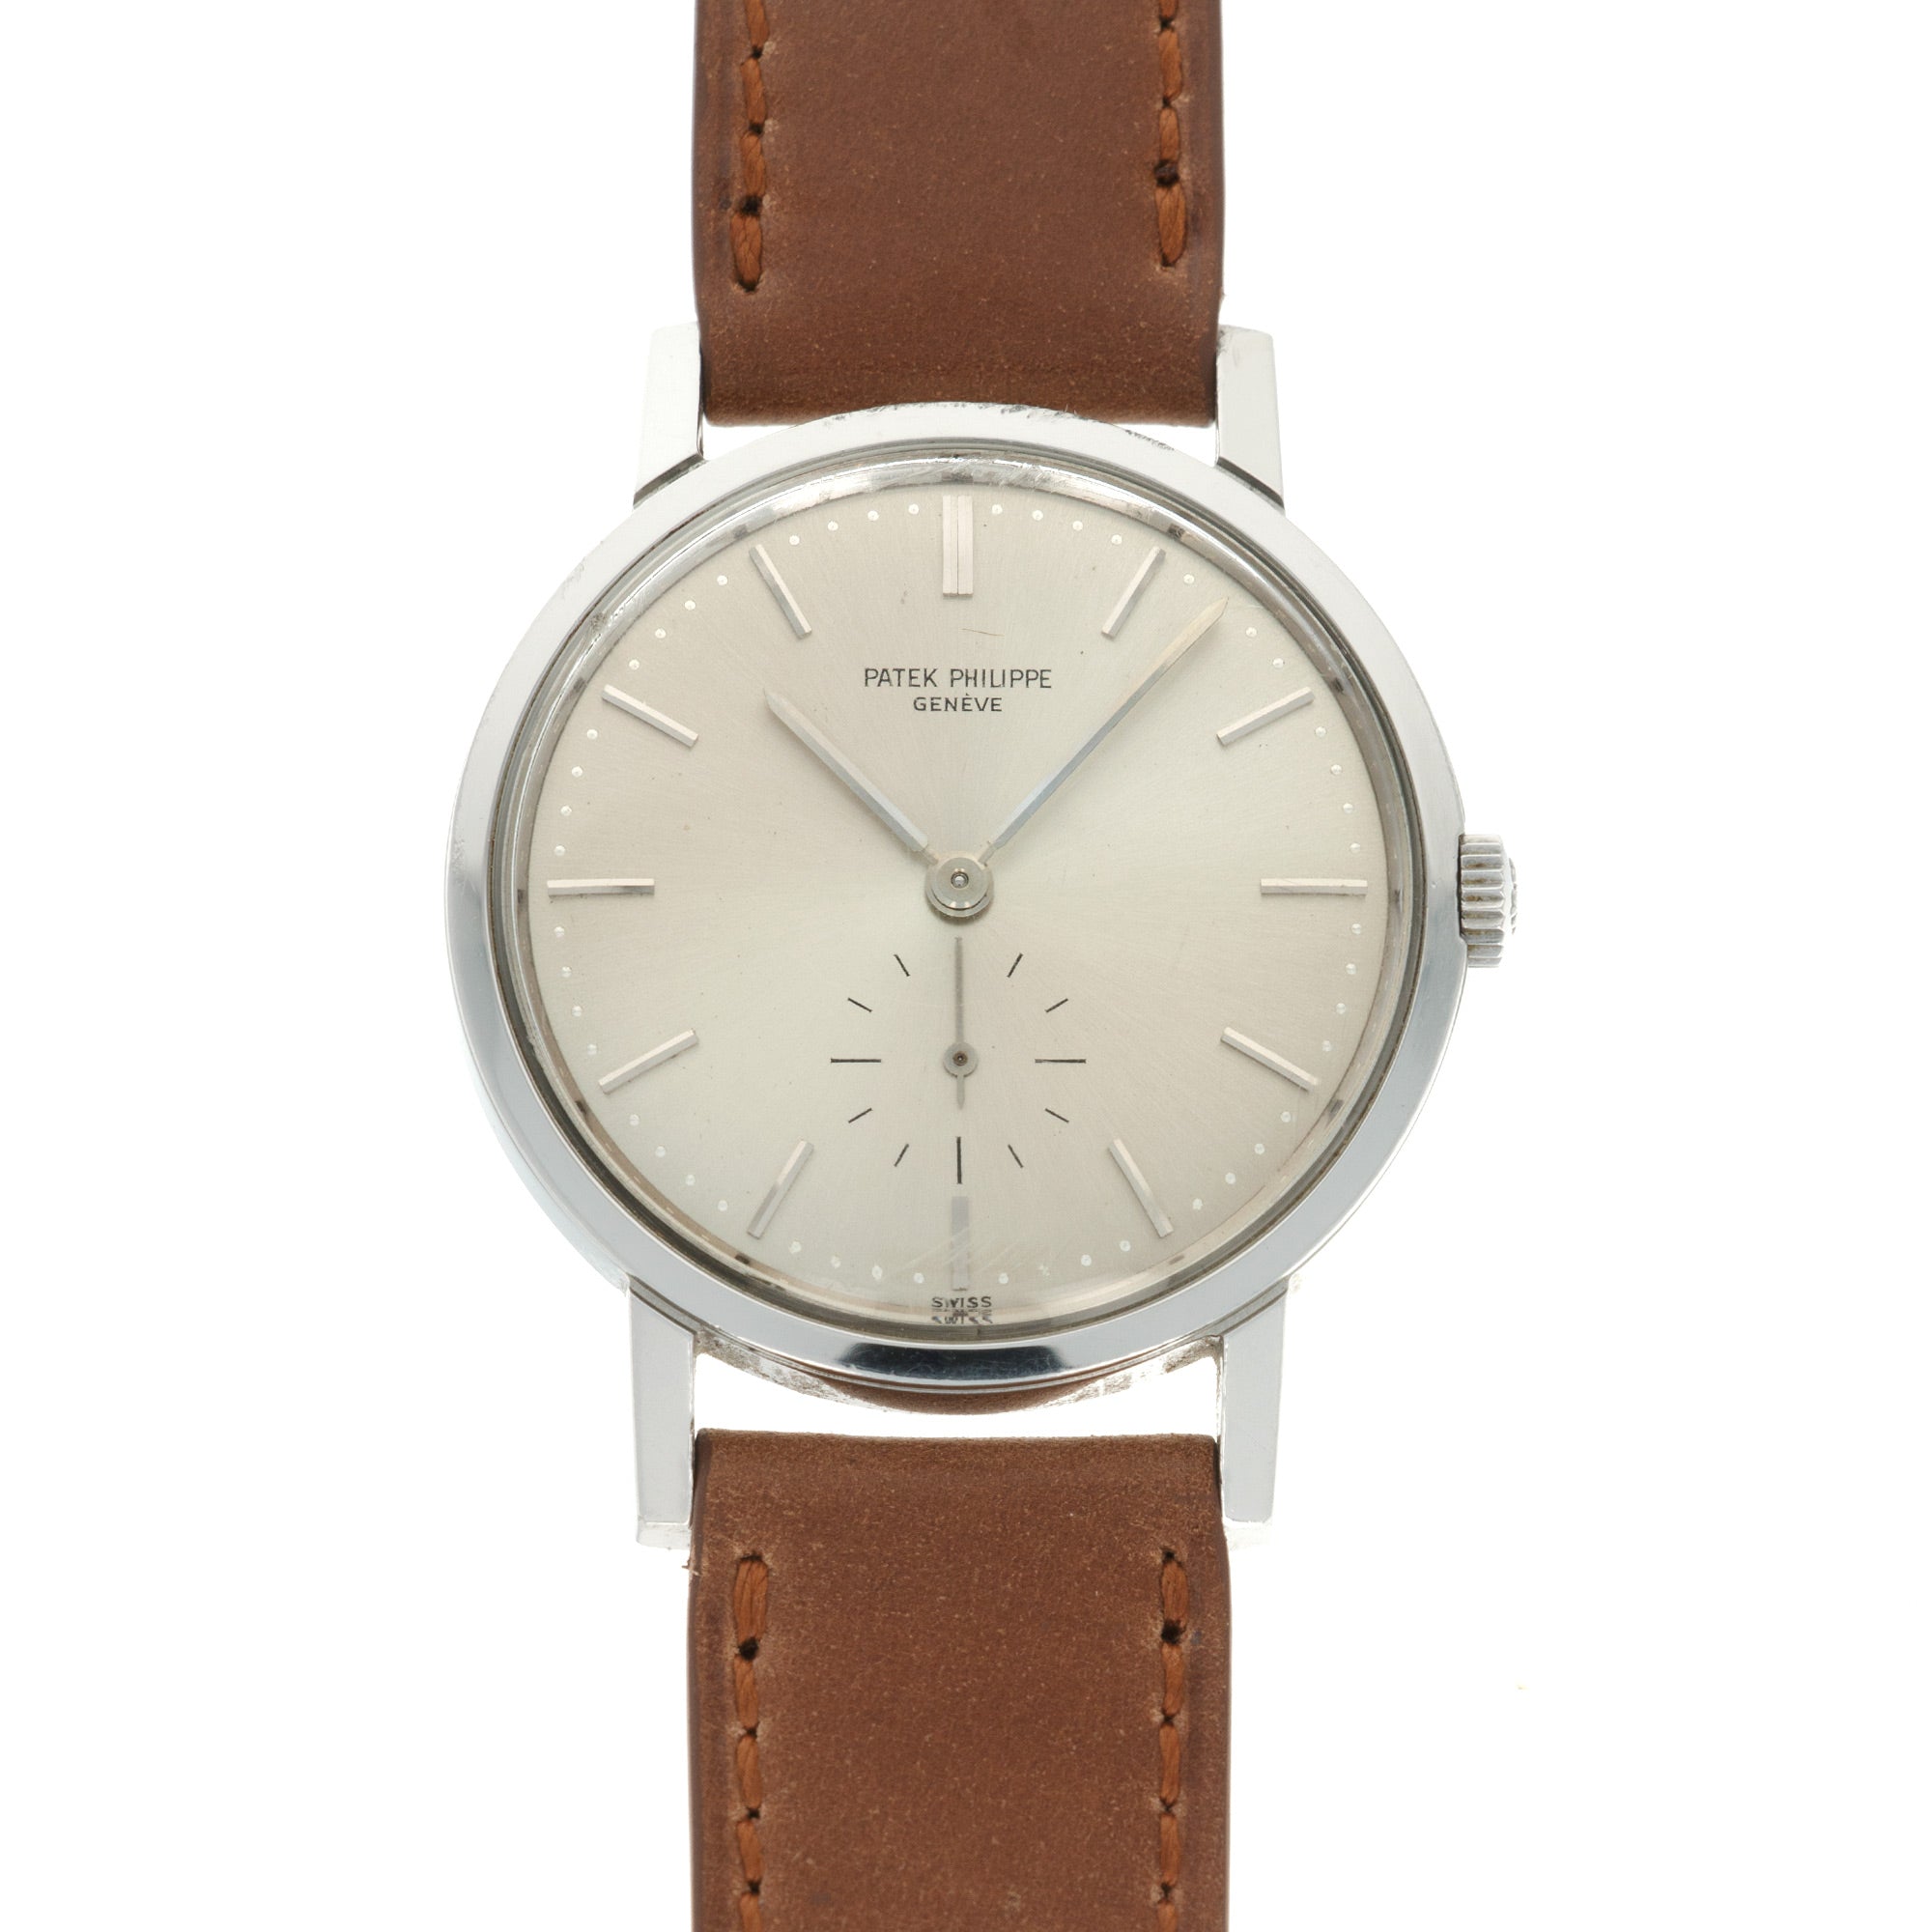 Patek Philippe - Patek Philippe Steel Calatrava Automatic Watch, Ref. 3466 - The Keystone Watches